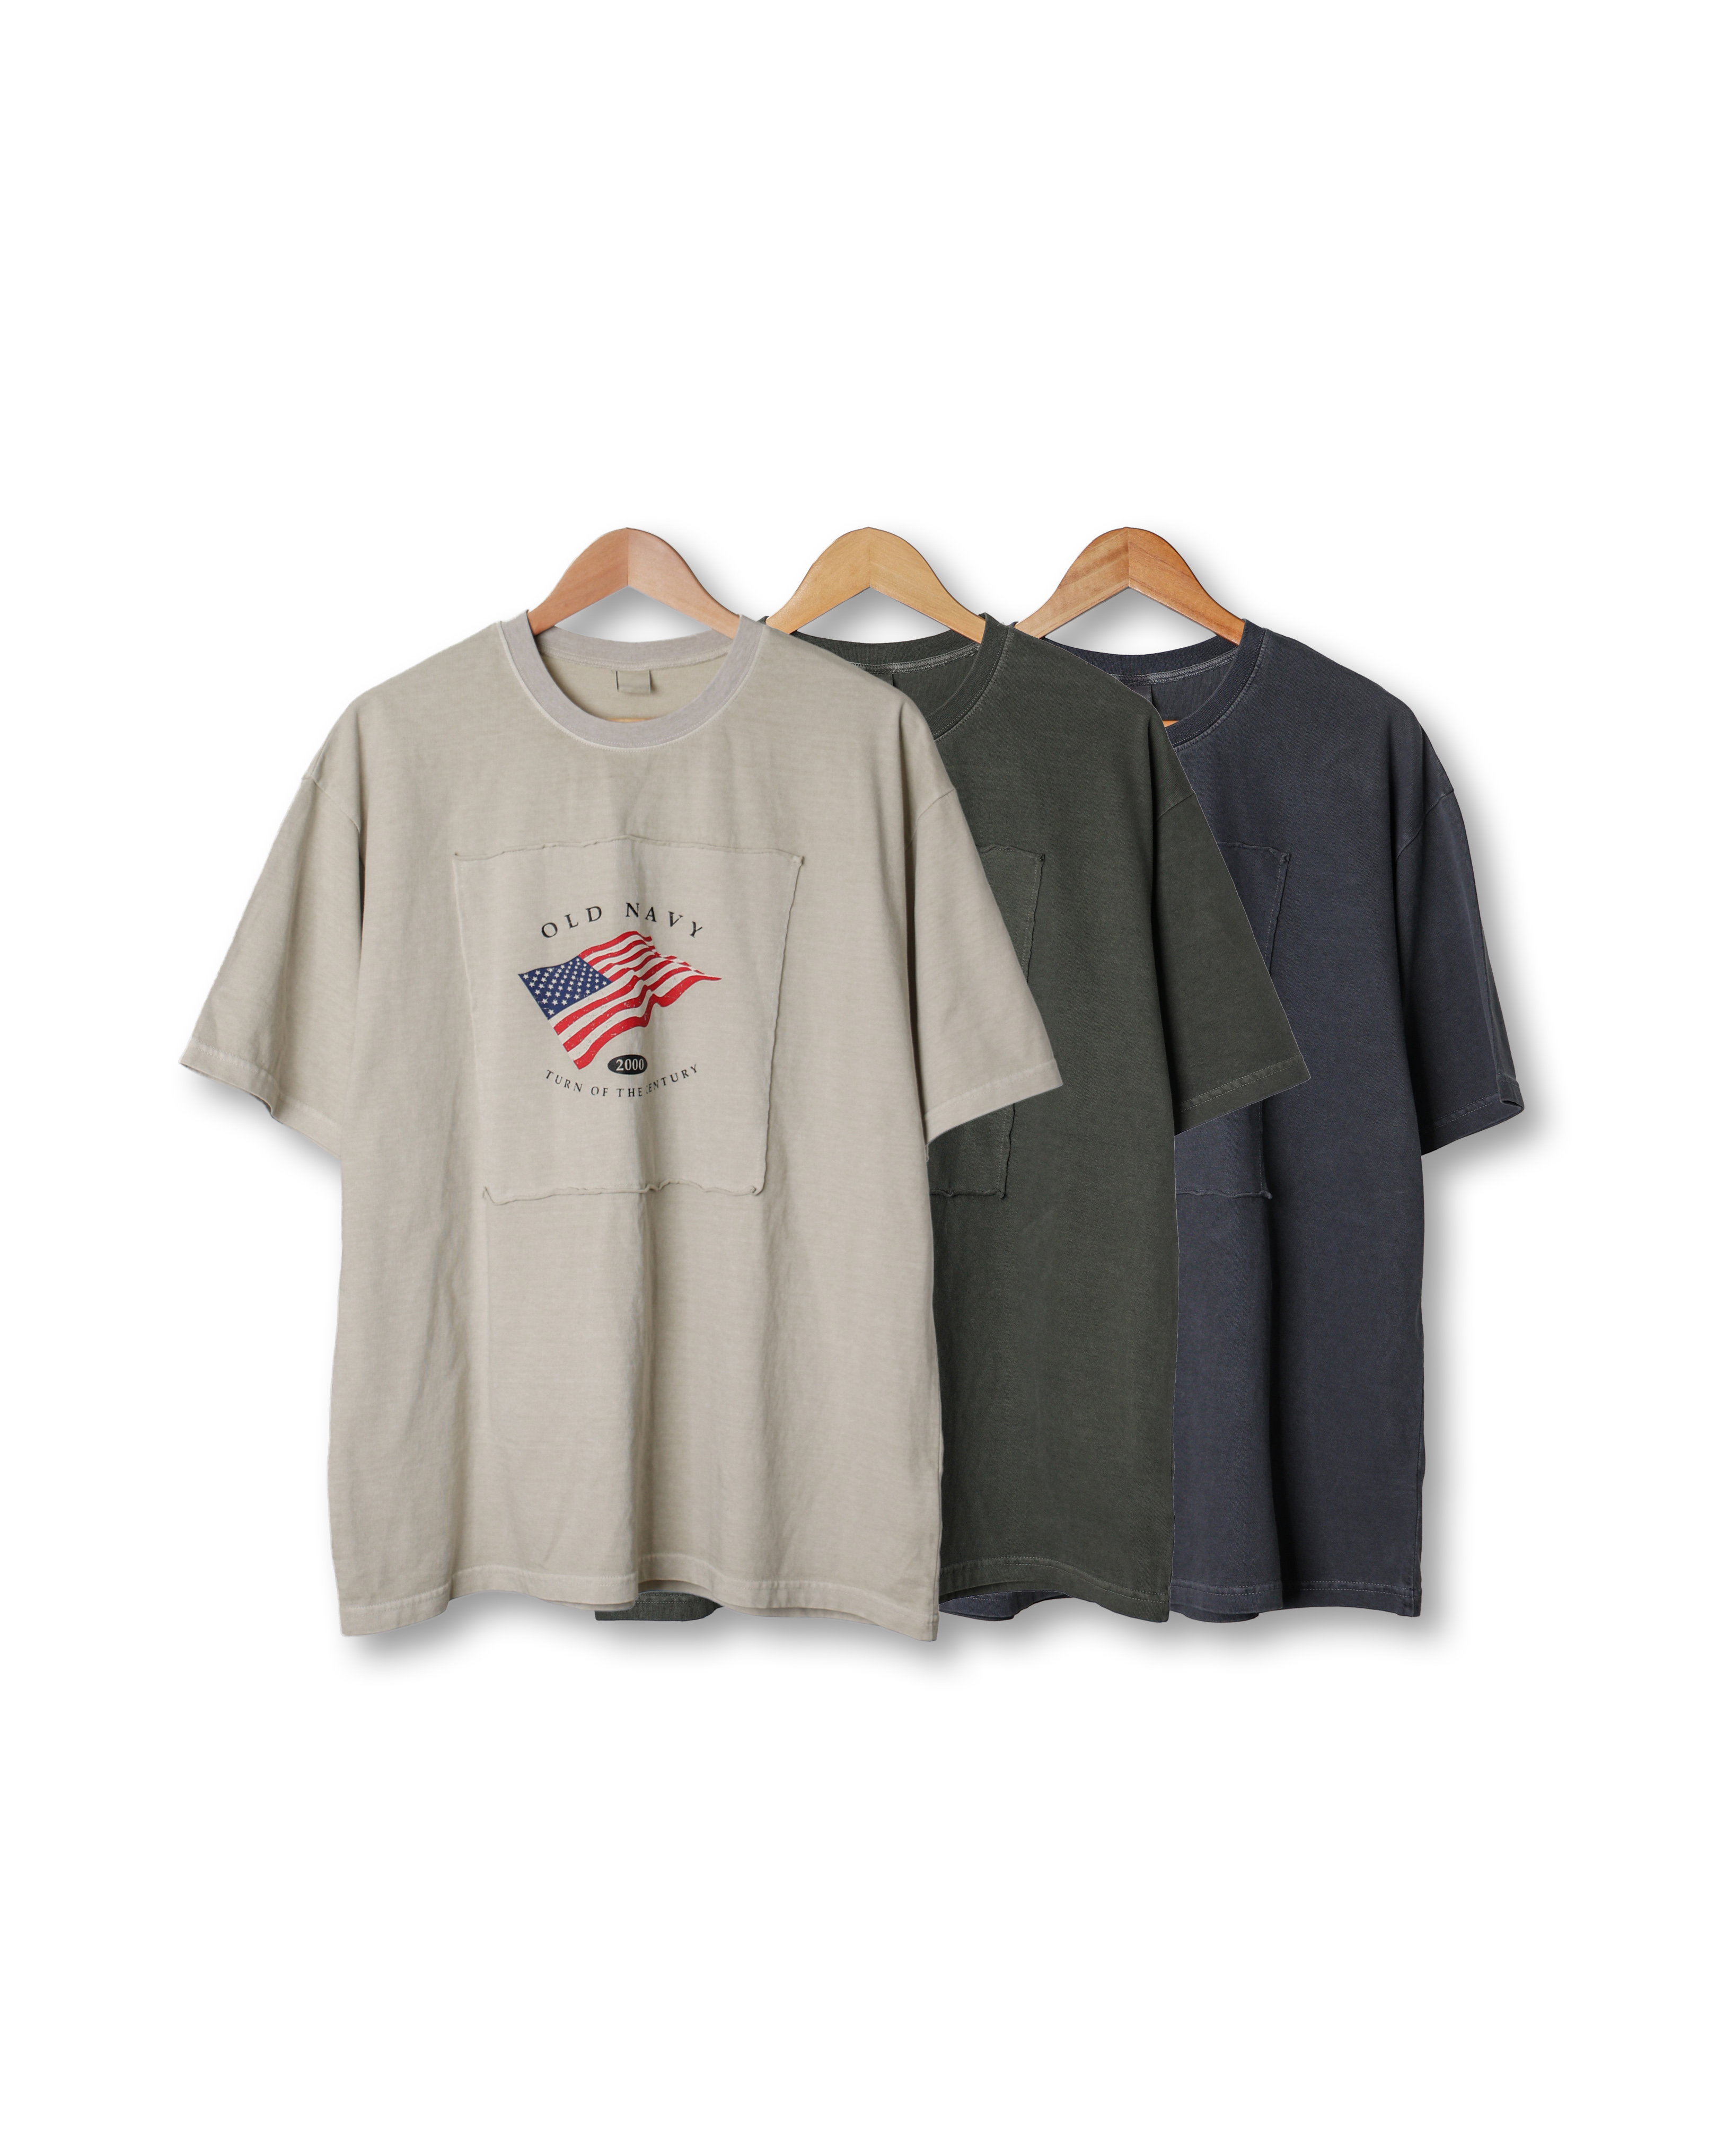 RAM OLD NAVY Flag Pigment T Shirts (Navy/Olive/Light Beige)